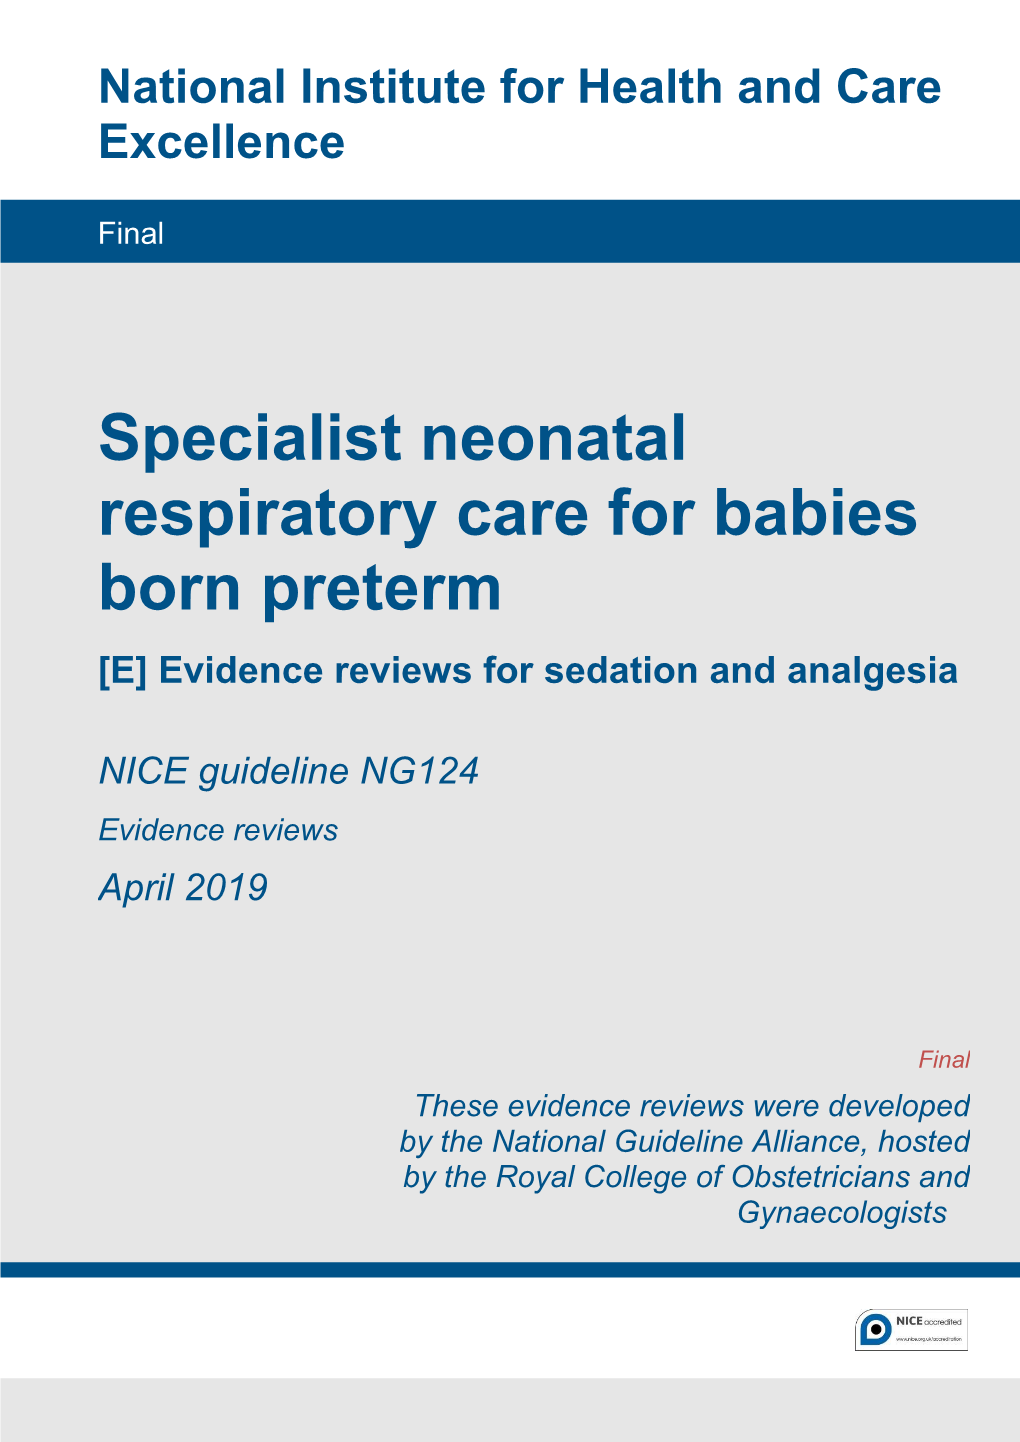 Specialist Neonatal Respiratory Care for Babies Born Preterm [E] Evidence Reviews for Sedation and Analgesia